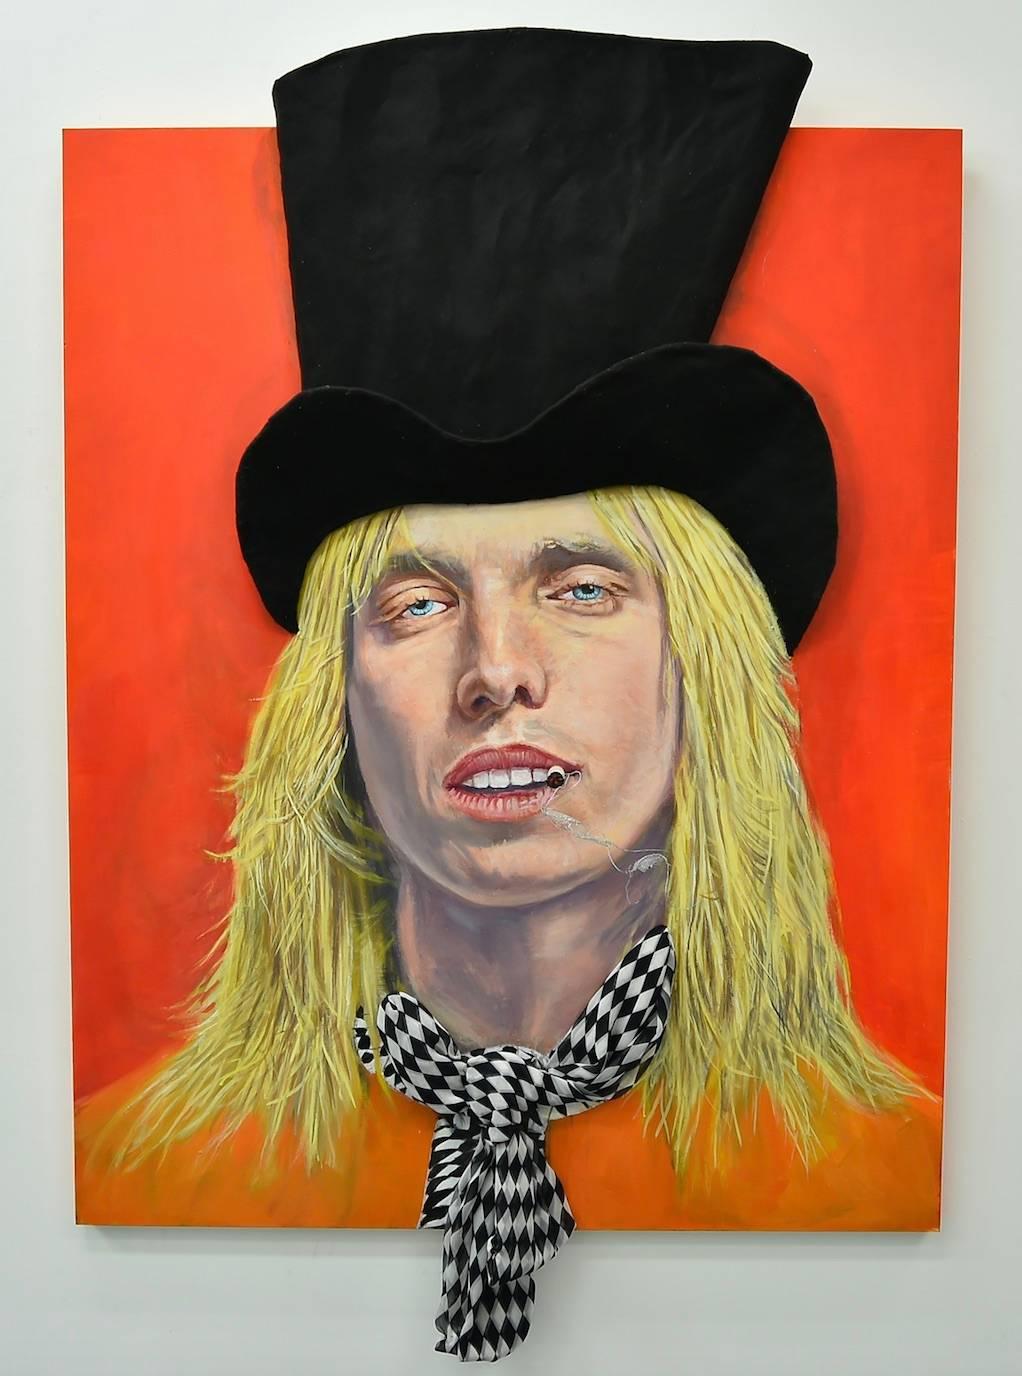 Smoking Tom Petty - Painting by StrosbergMandel